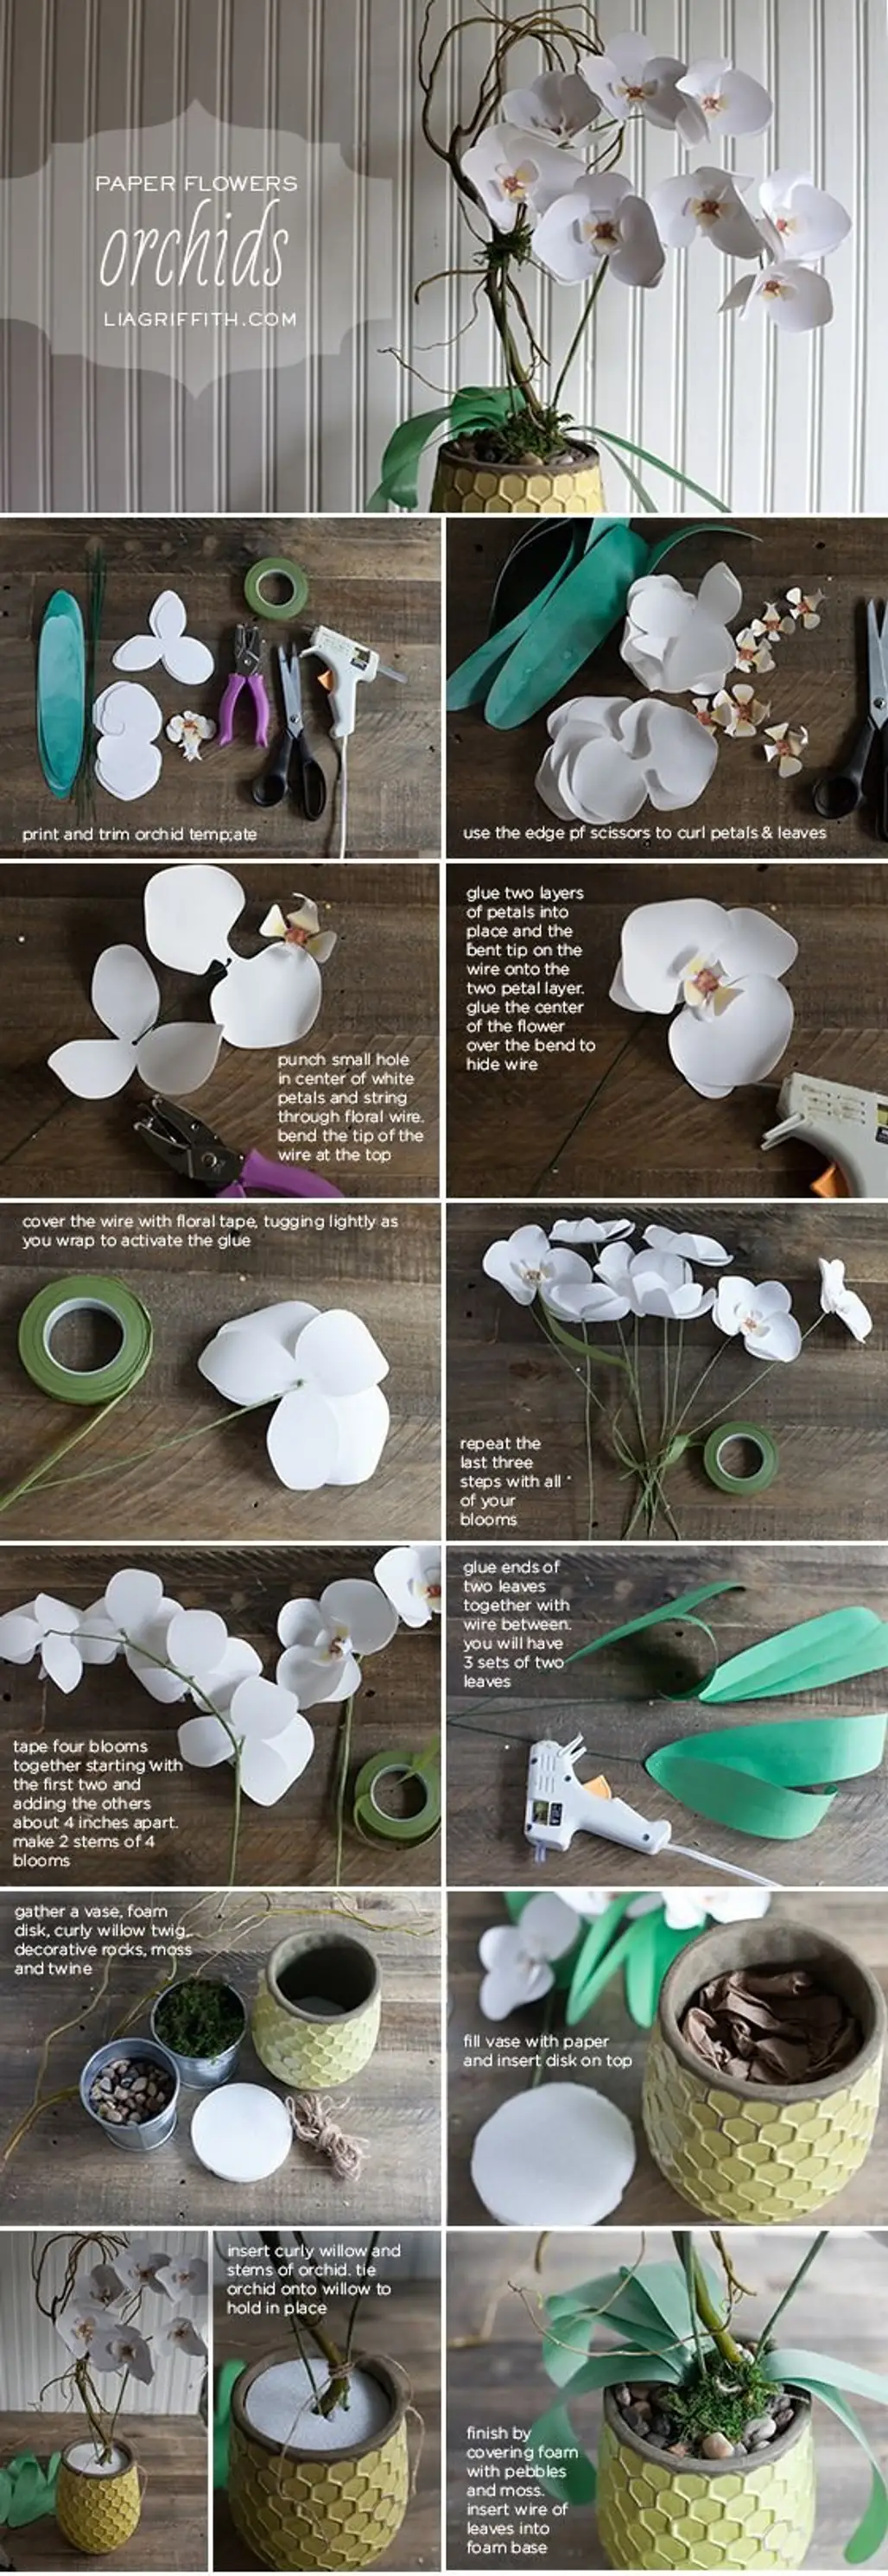 Paper Orchids